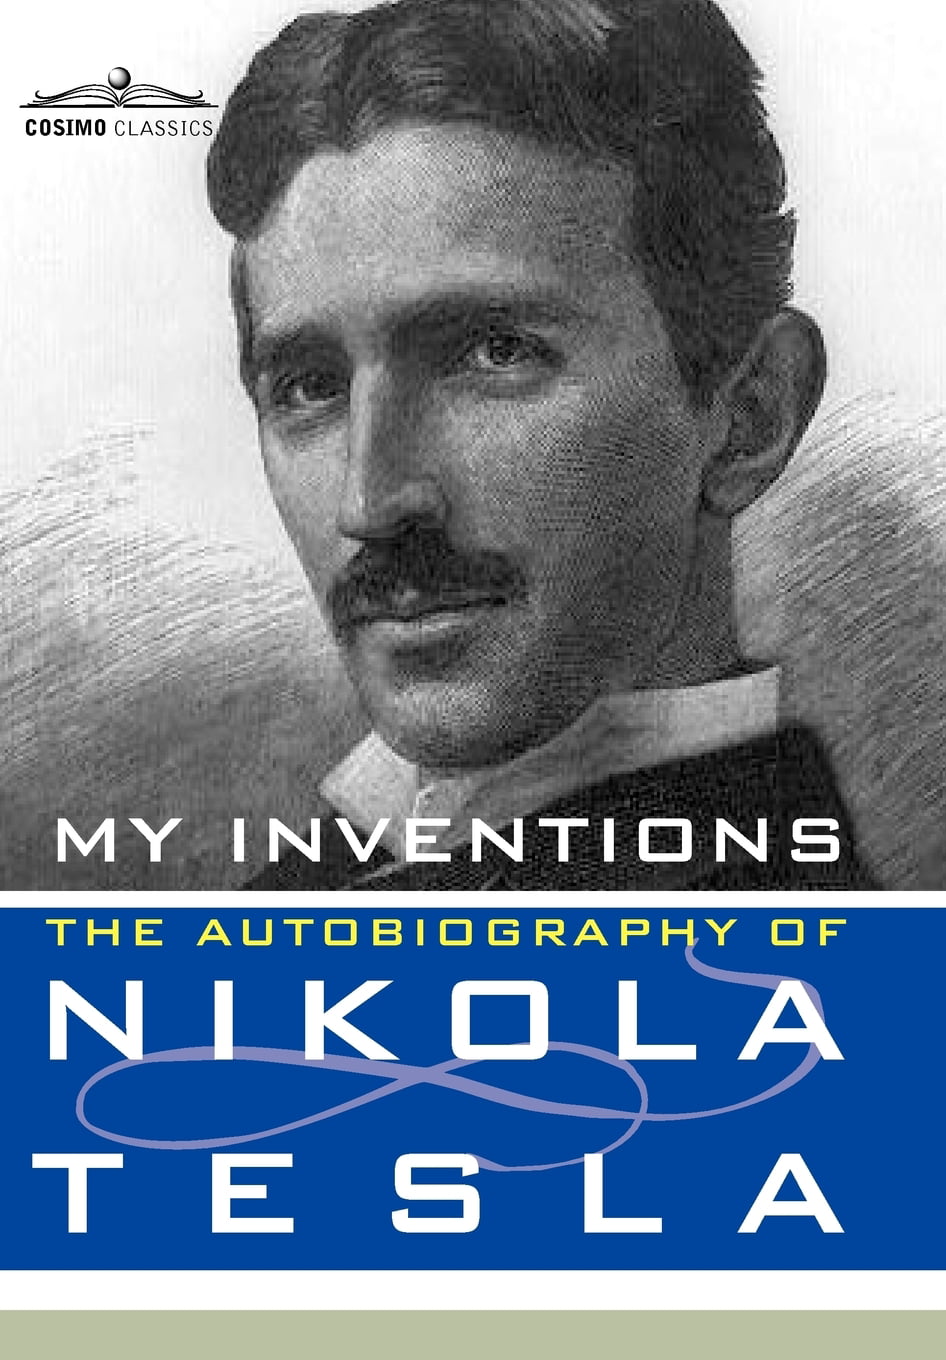 books written by nikola tesla